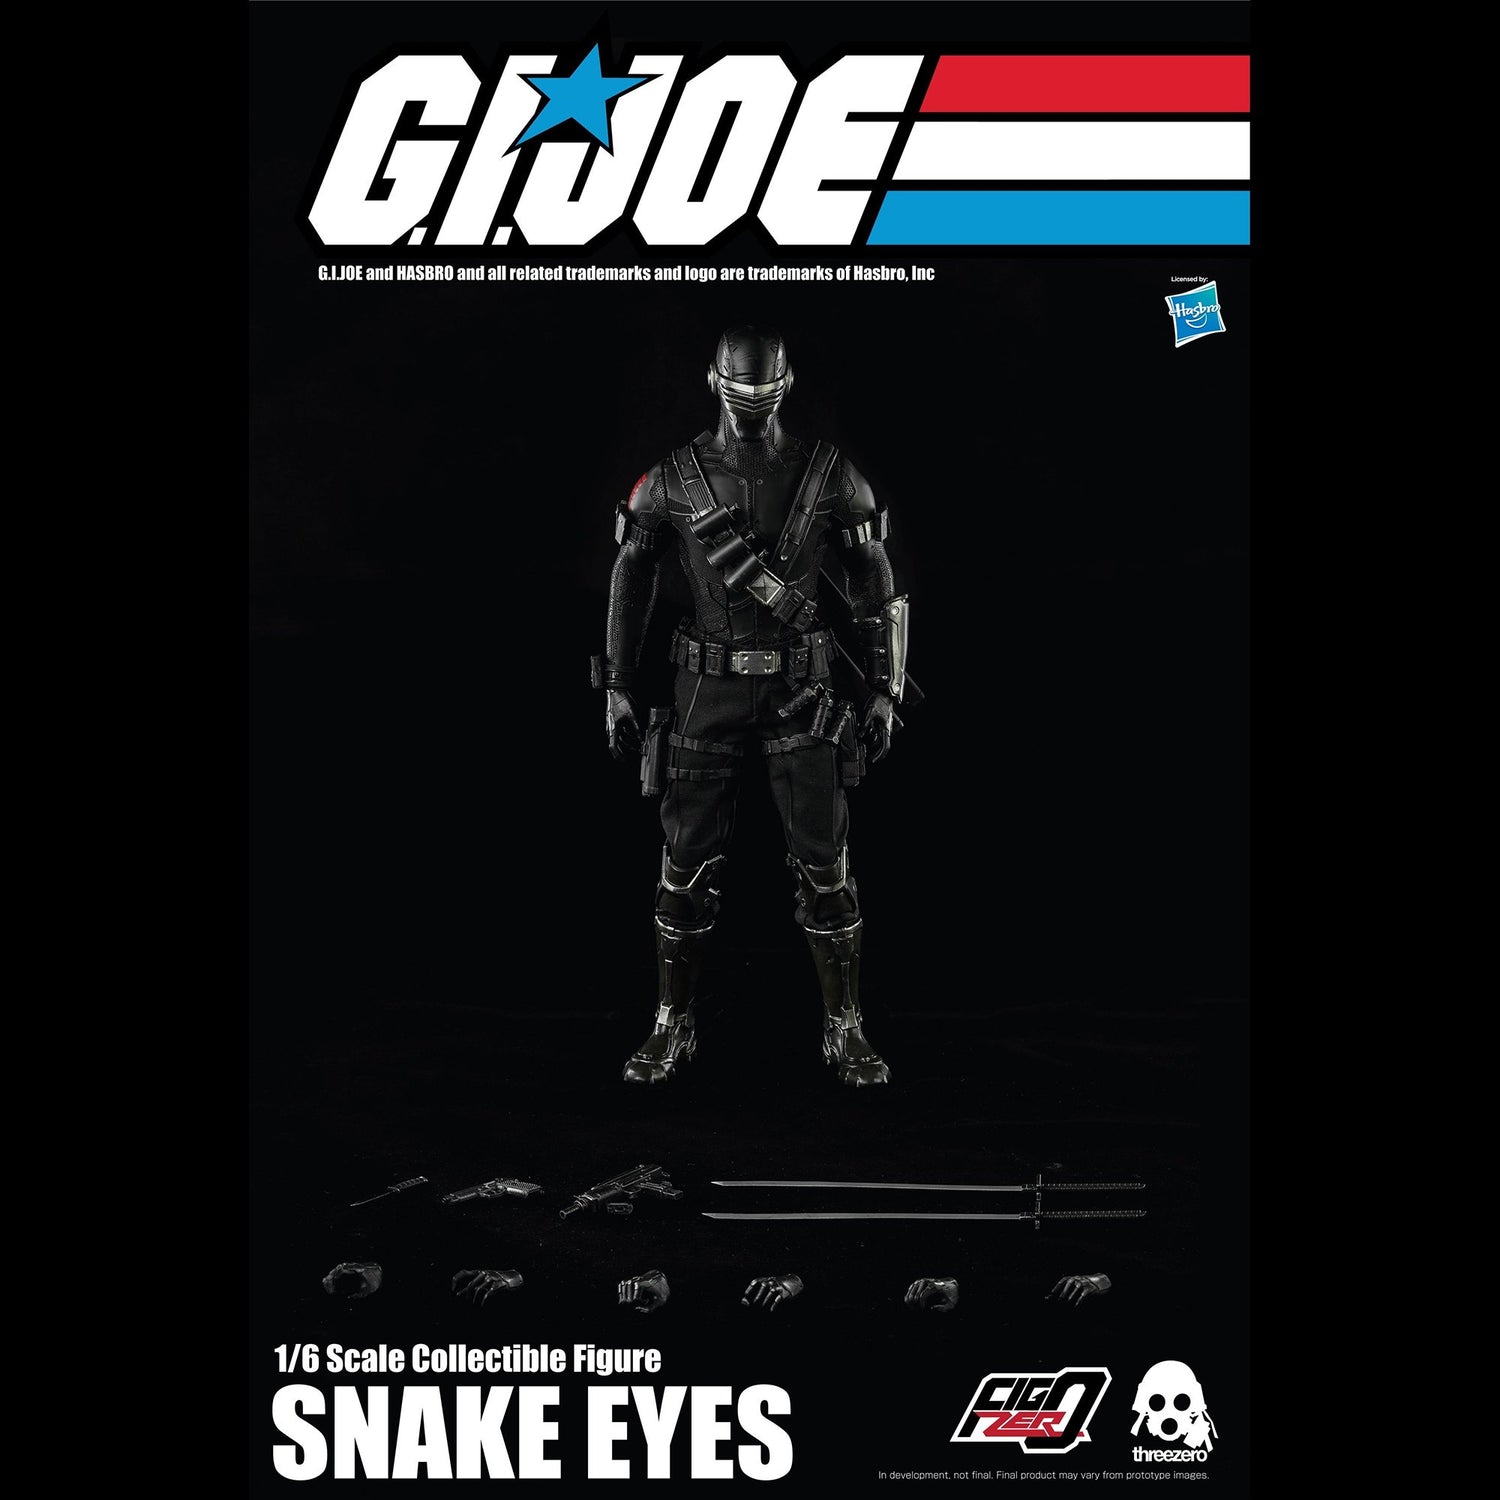 Hasbro Threezero G.I. Joe Snake Eyes 1/6 figure and accessories